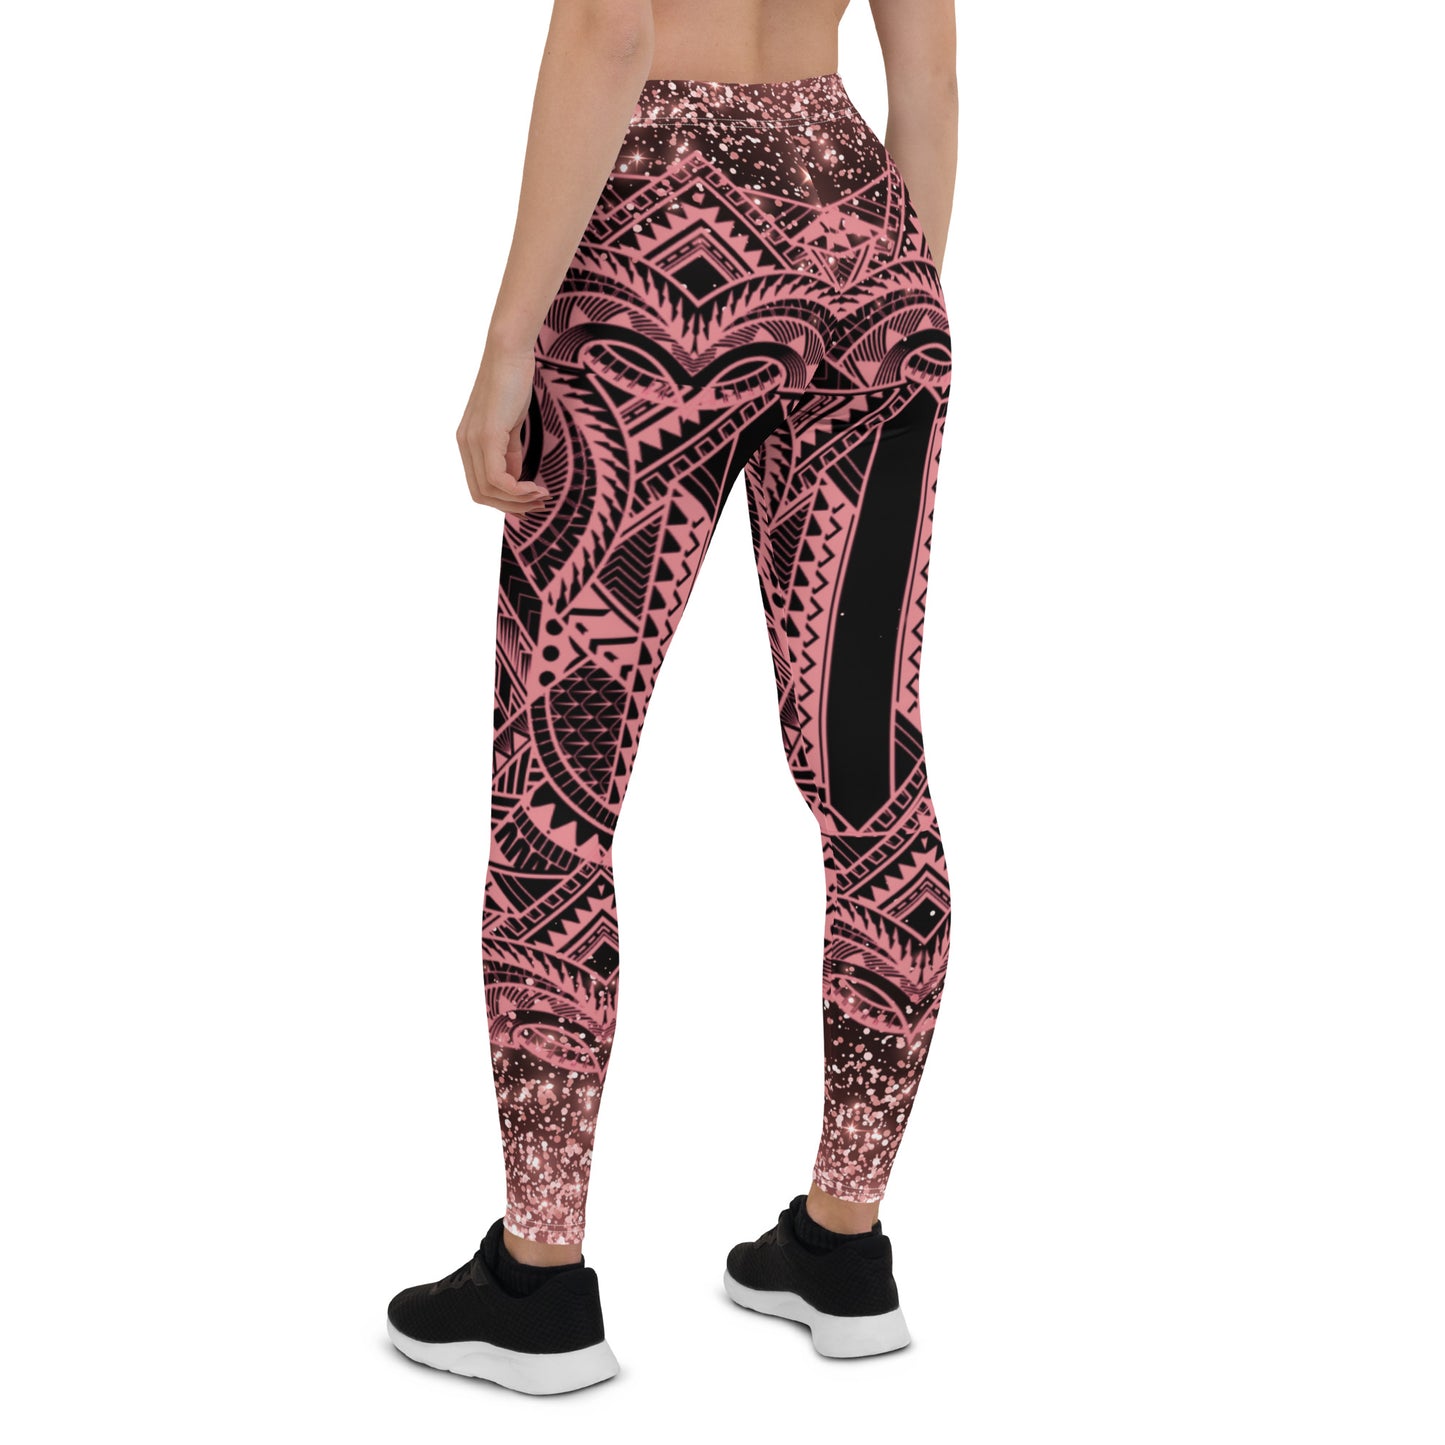 Black Leggings Pacific Pink Sparkle Pattern